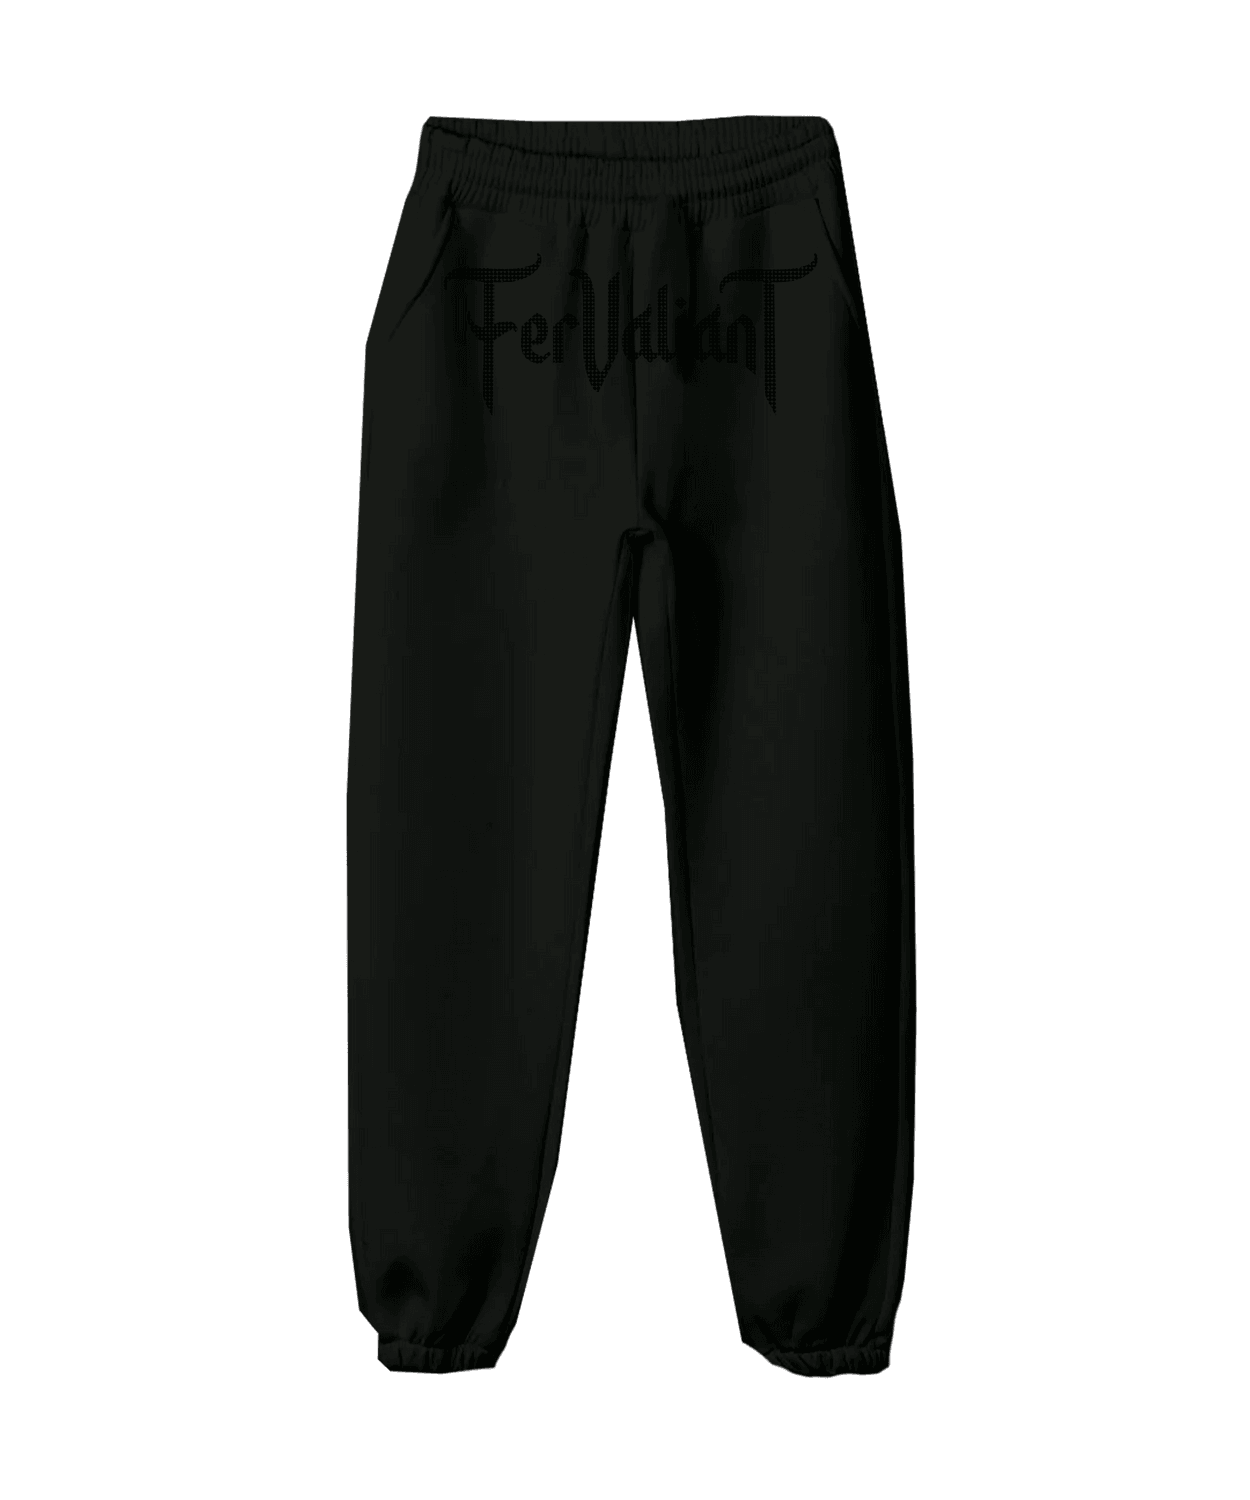  Black Rhinestone Sweatpants